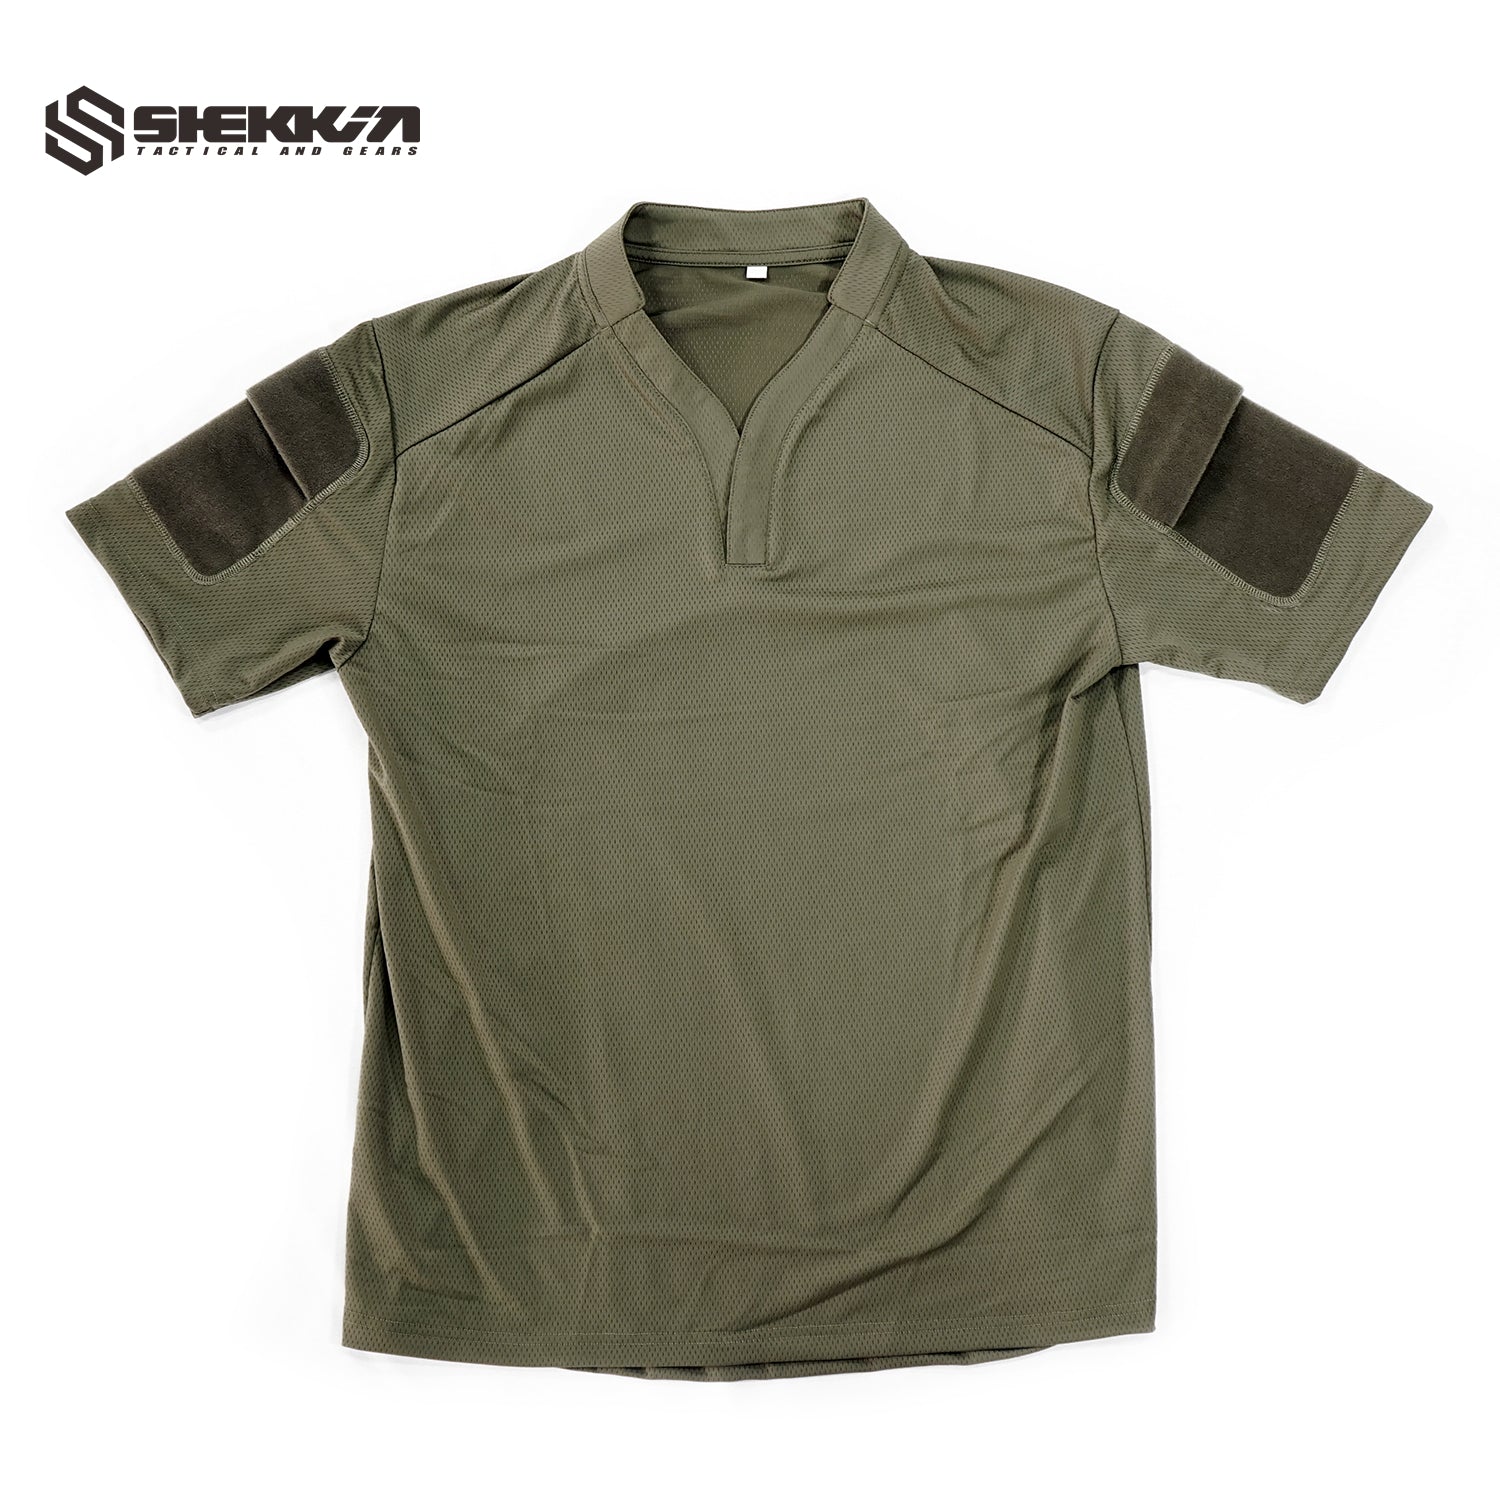 Velocity style BOSS Rugby Shirt Short Sleeves - Shekkin Gears